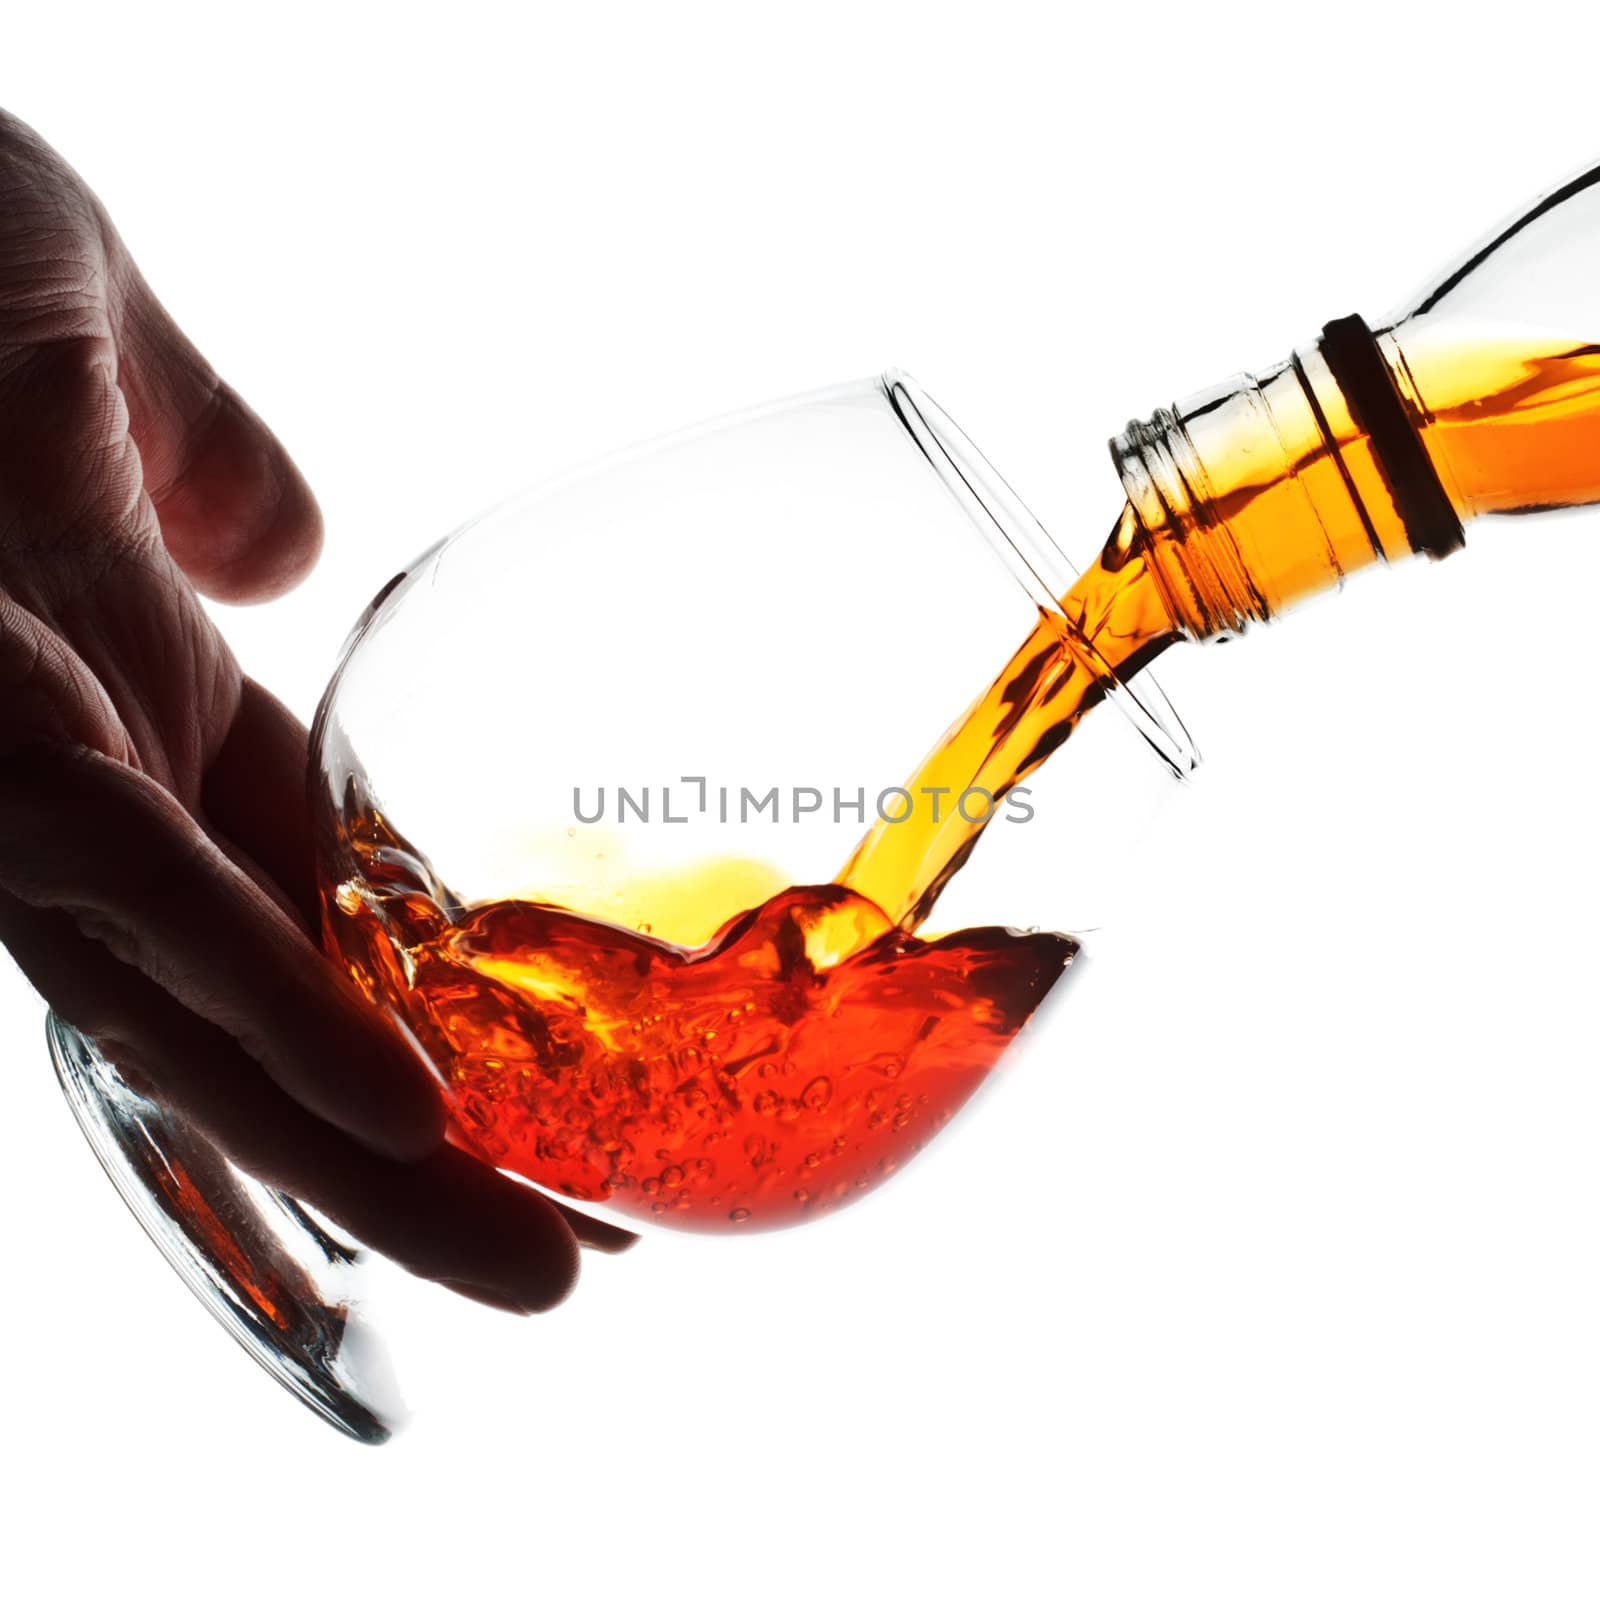 Pouring Cognac by petr_malyshev